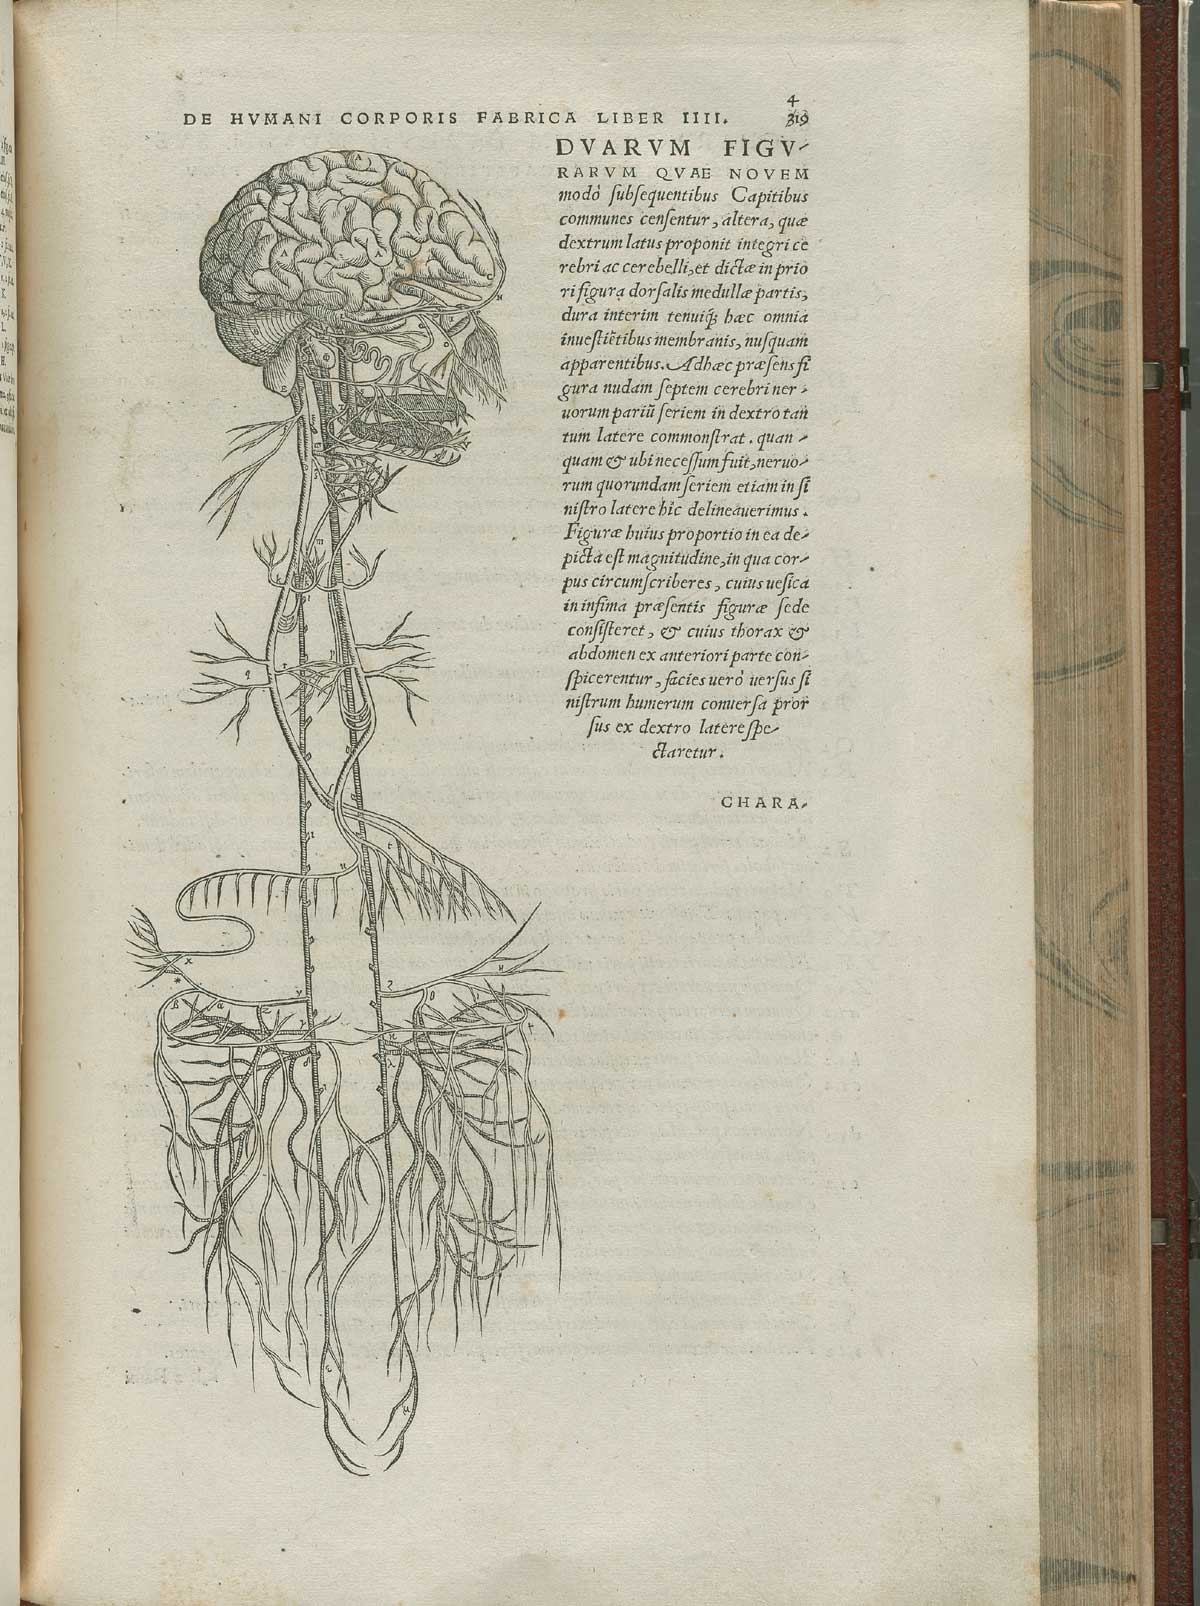 Page 419 of Andreas Vesalius' De corporis humani fabrica libri septem, featuring the illustrated woodcut of the brain and autonomic system.